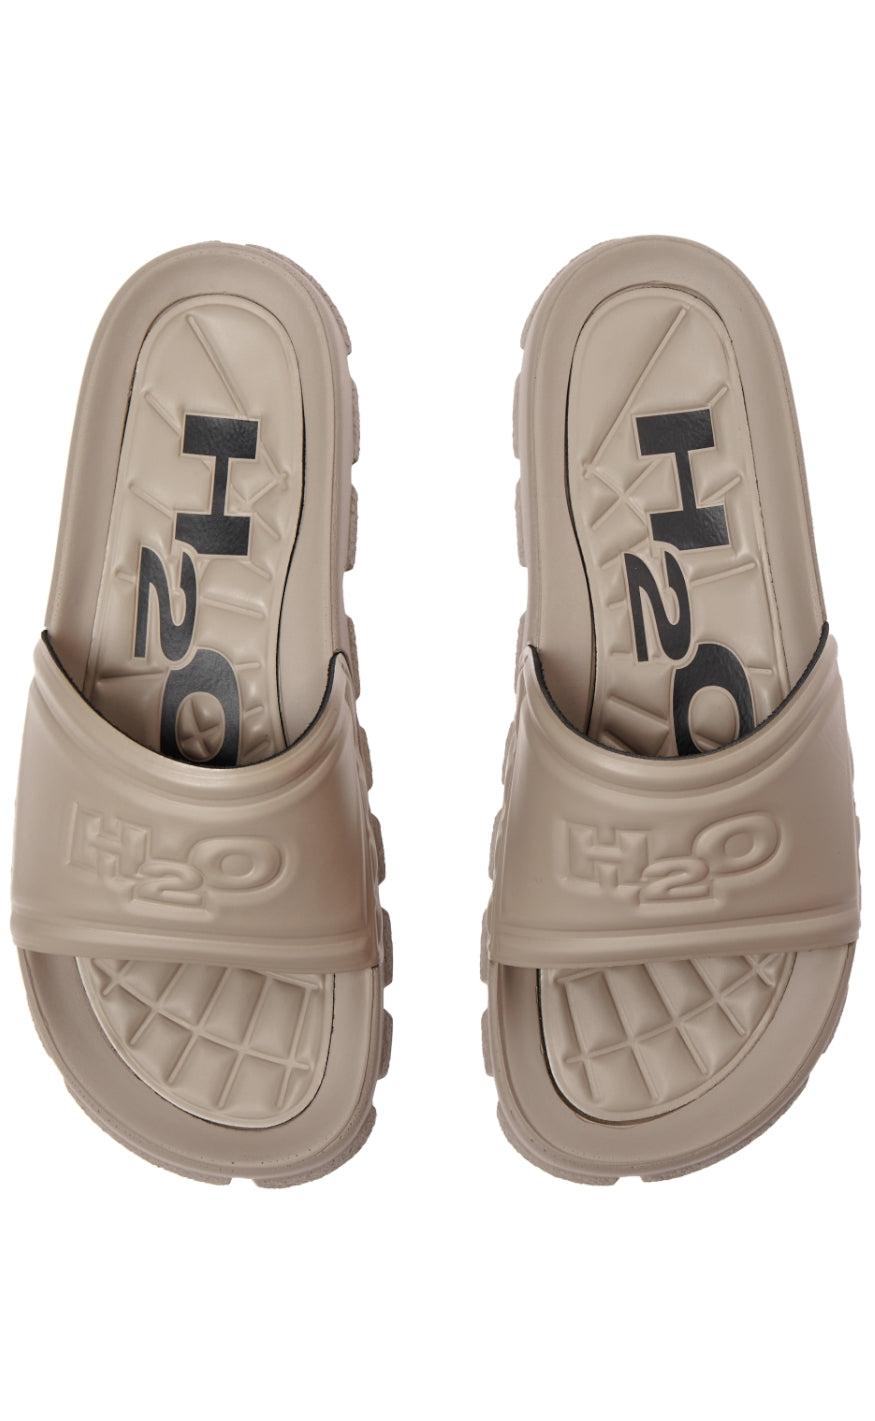 H2O Sandal - Trek - | Hurtig levering | Fashionbystrand